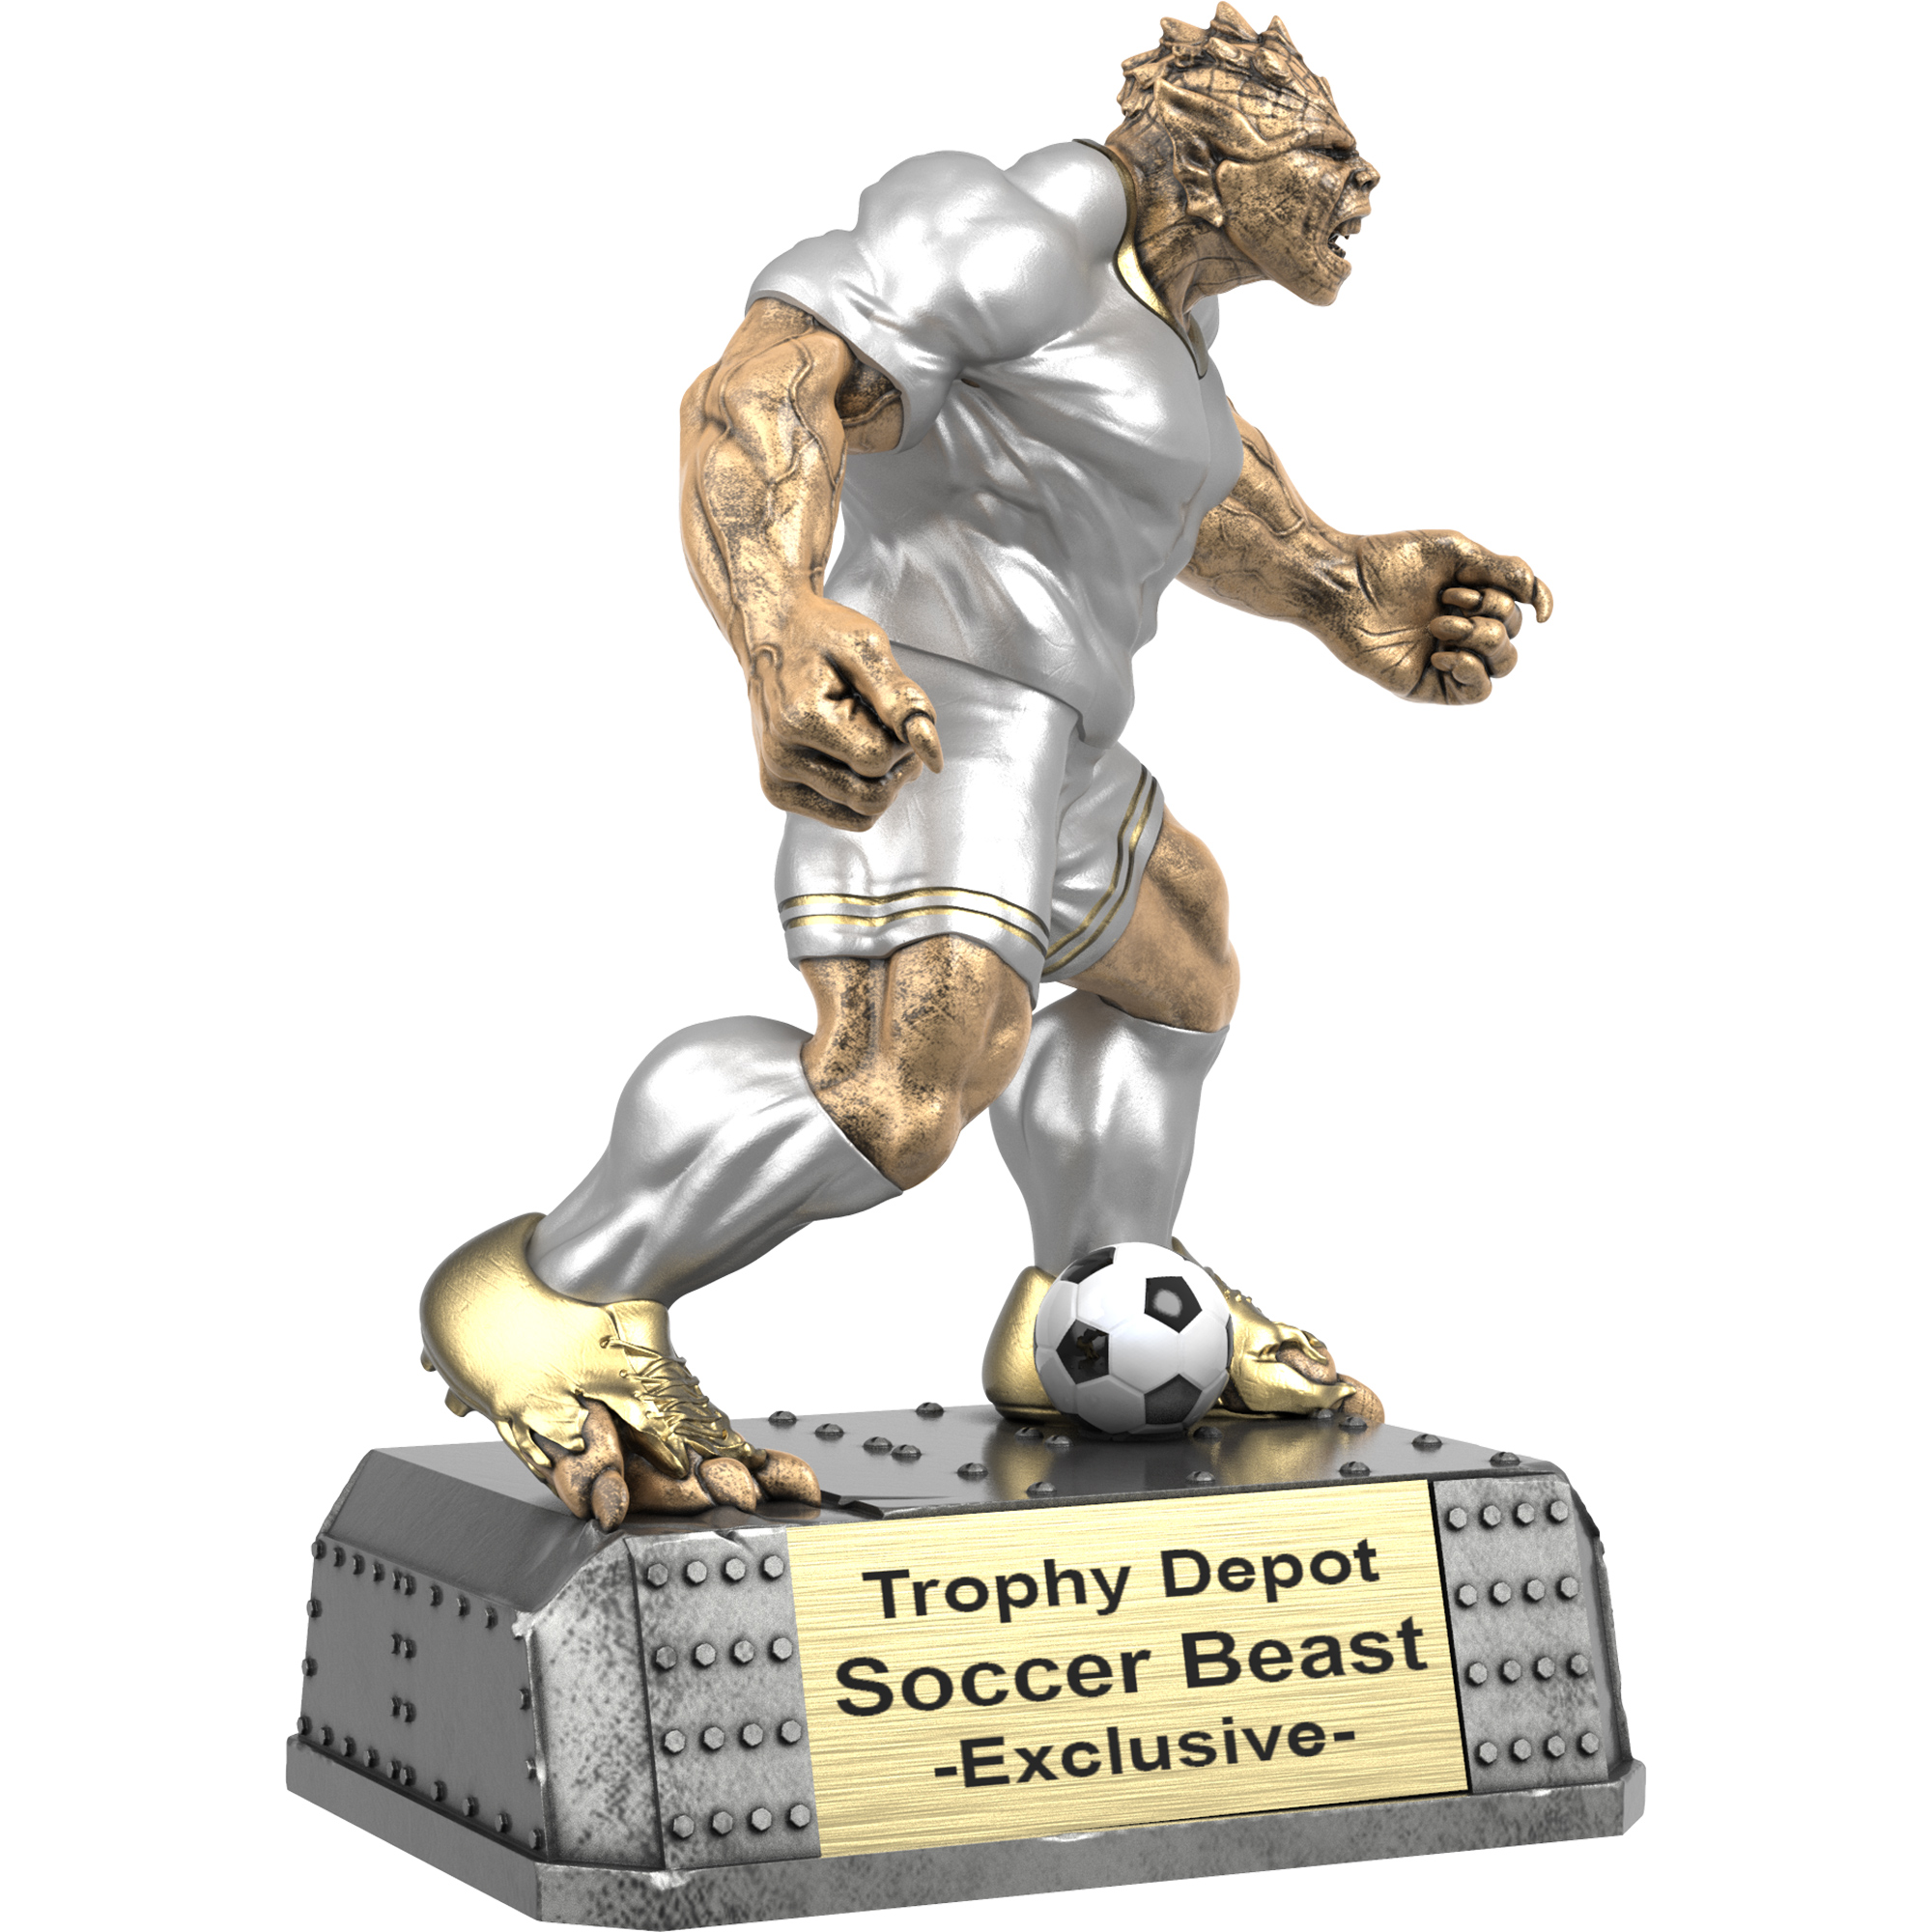 Soccer Beast Sculpture Trophy - 9.25 inch